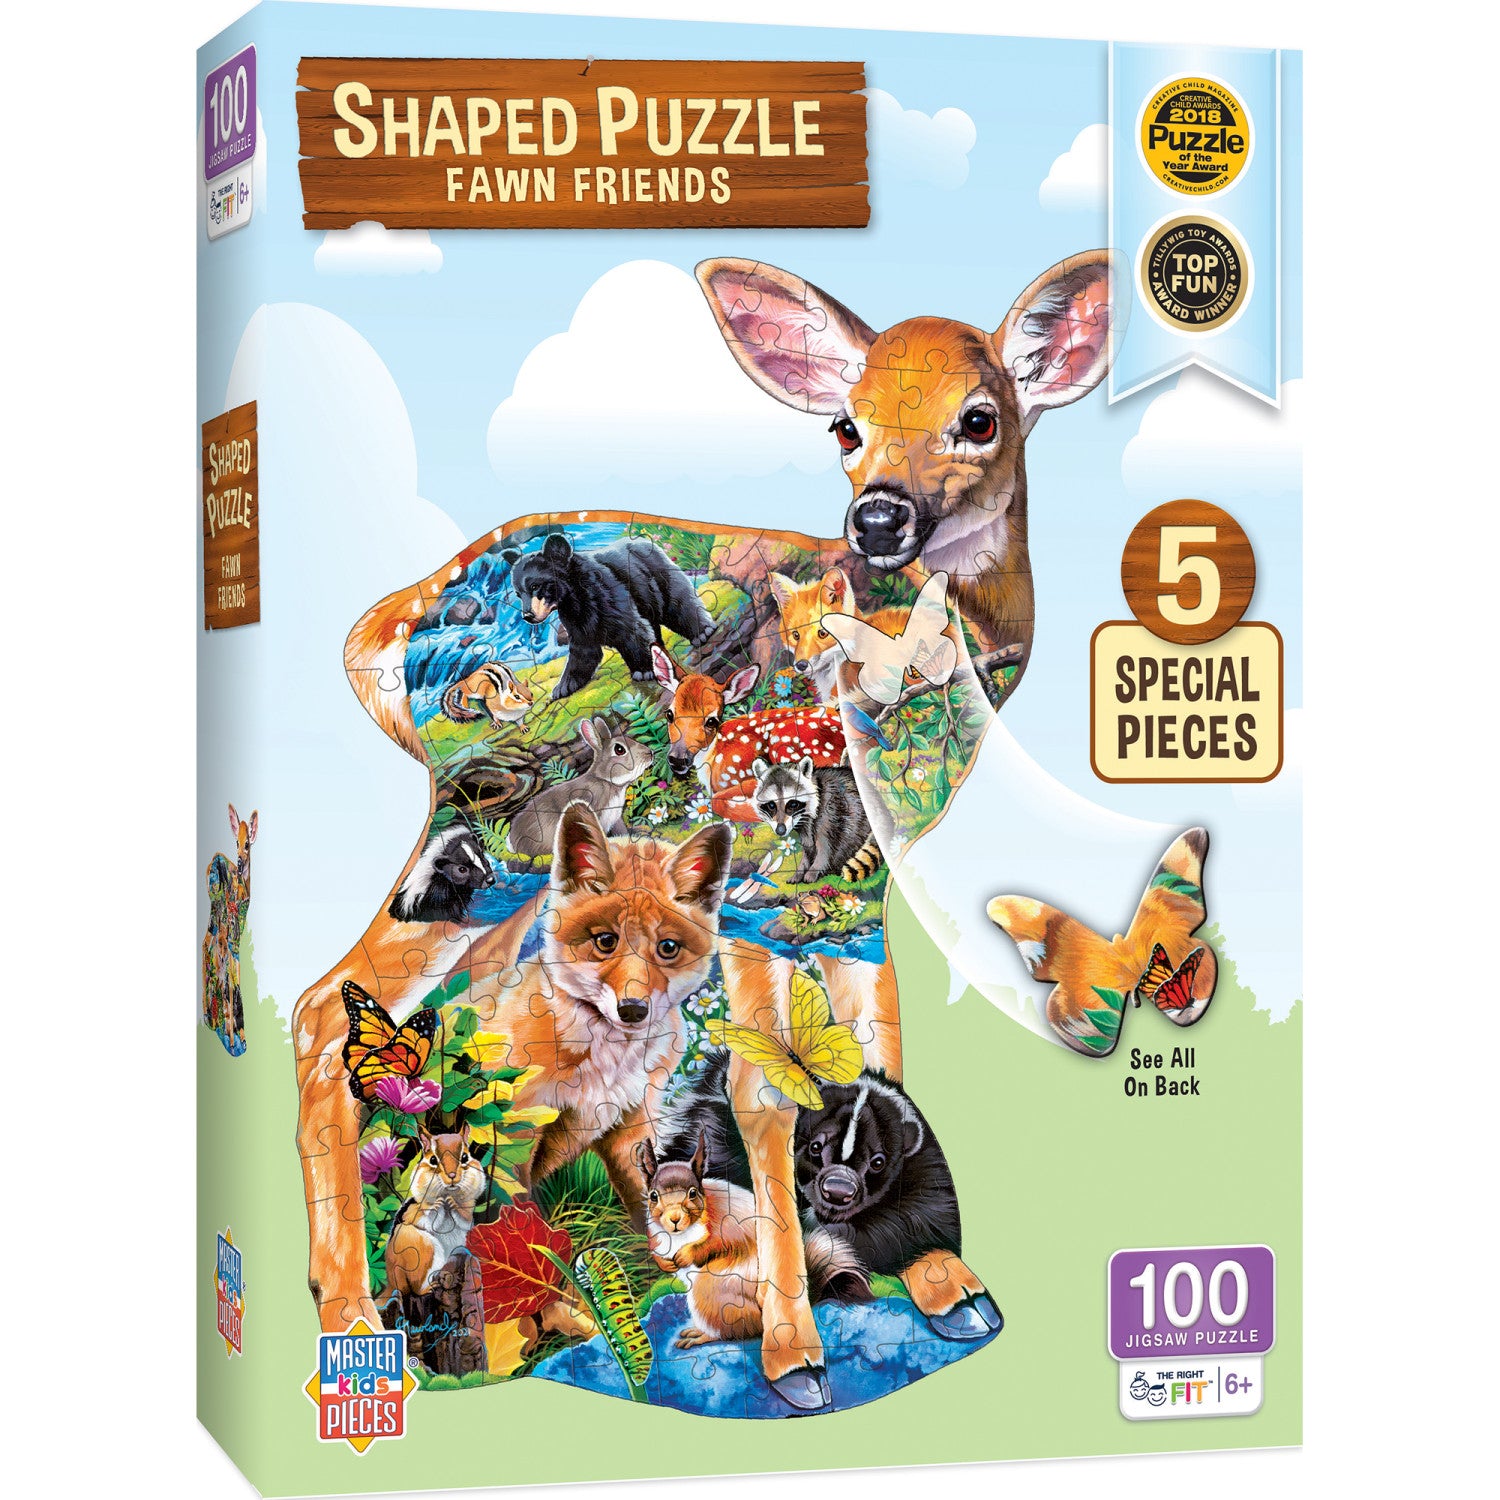 Trefl World Map with Animals Kids Jigsaw Puzzle - 25pc